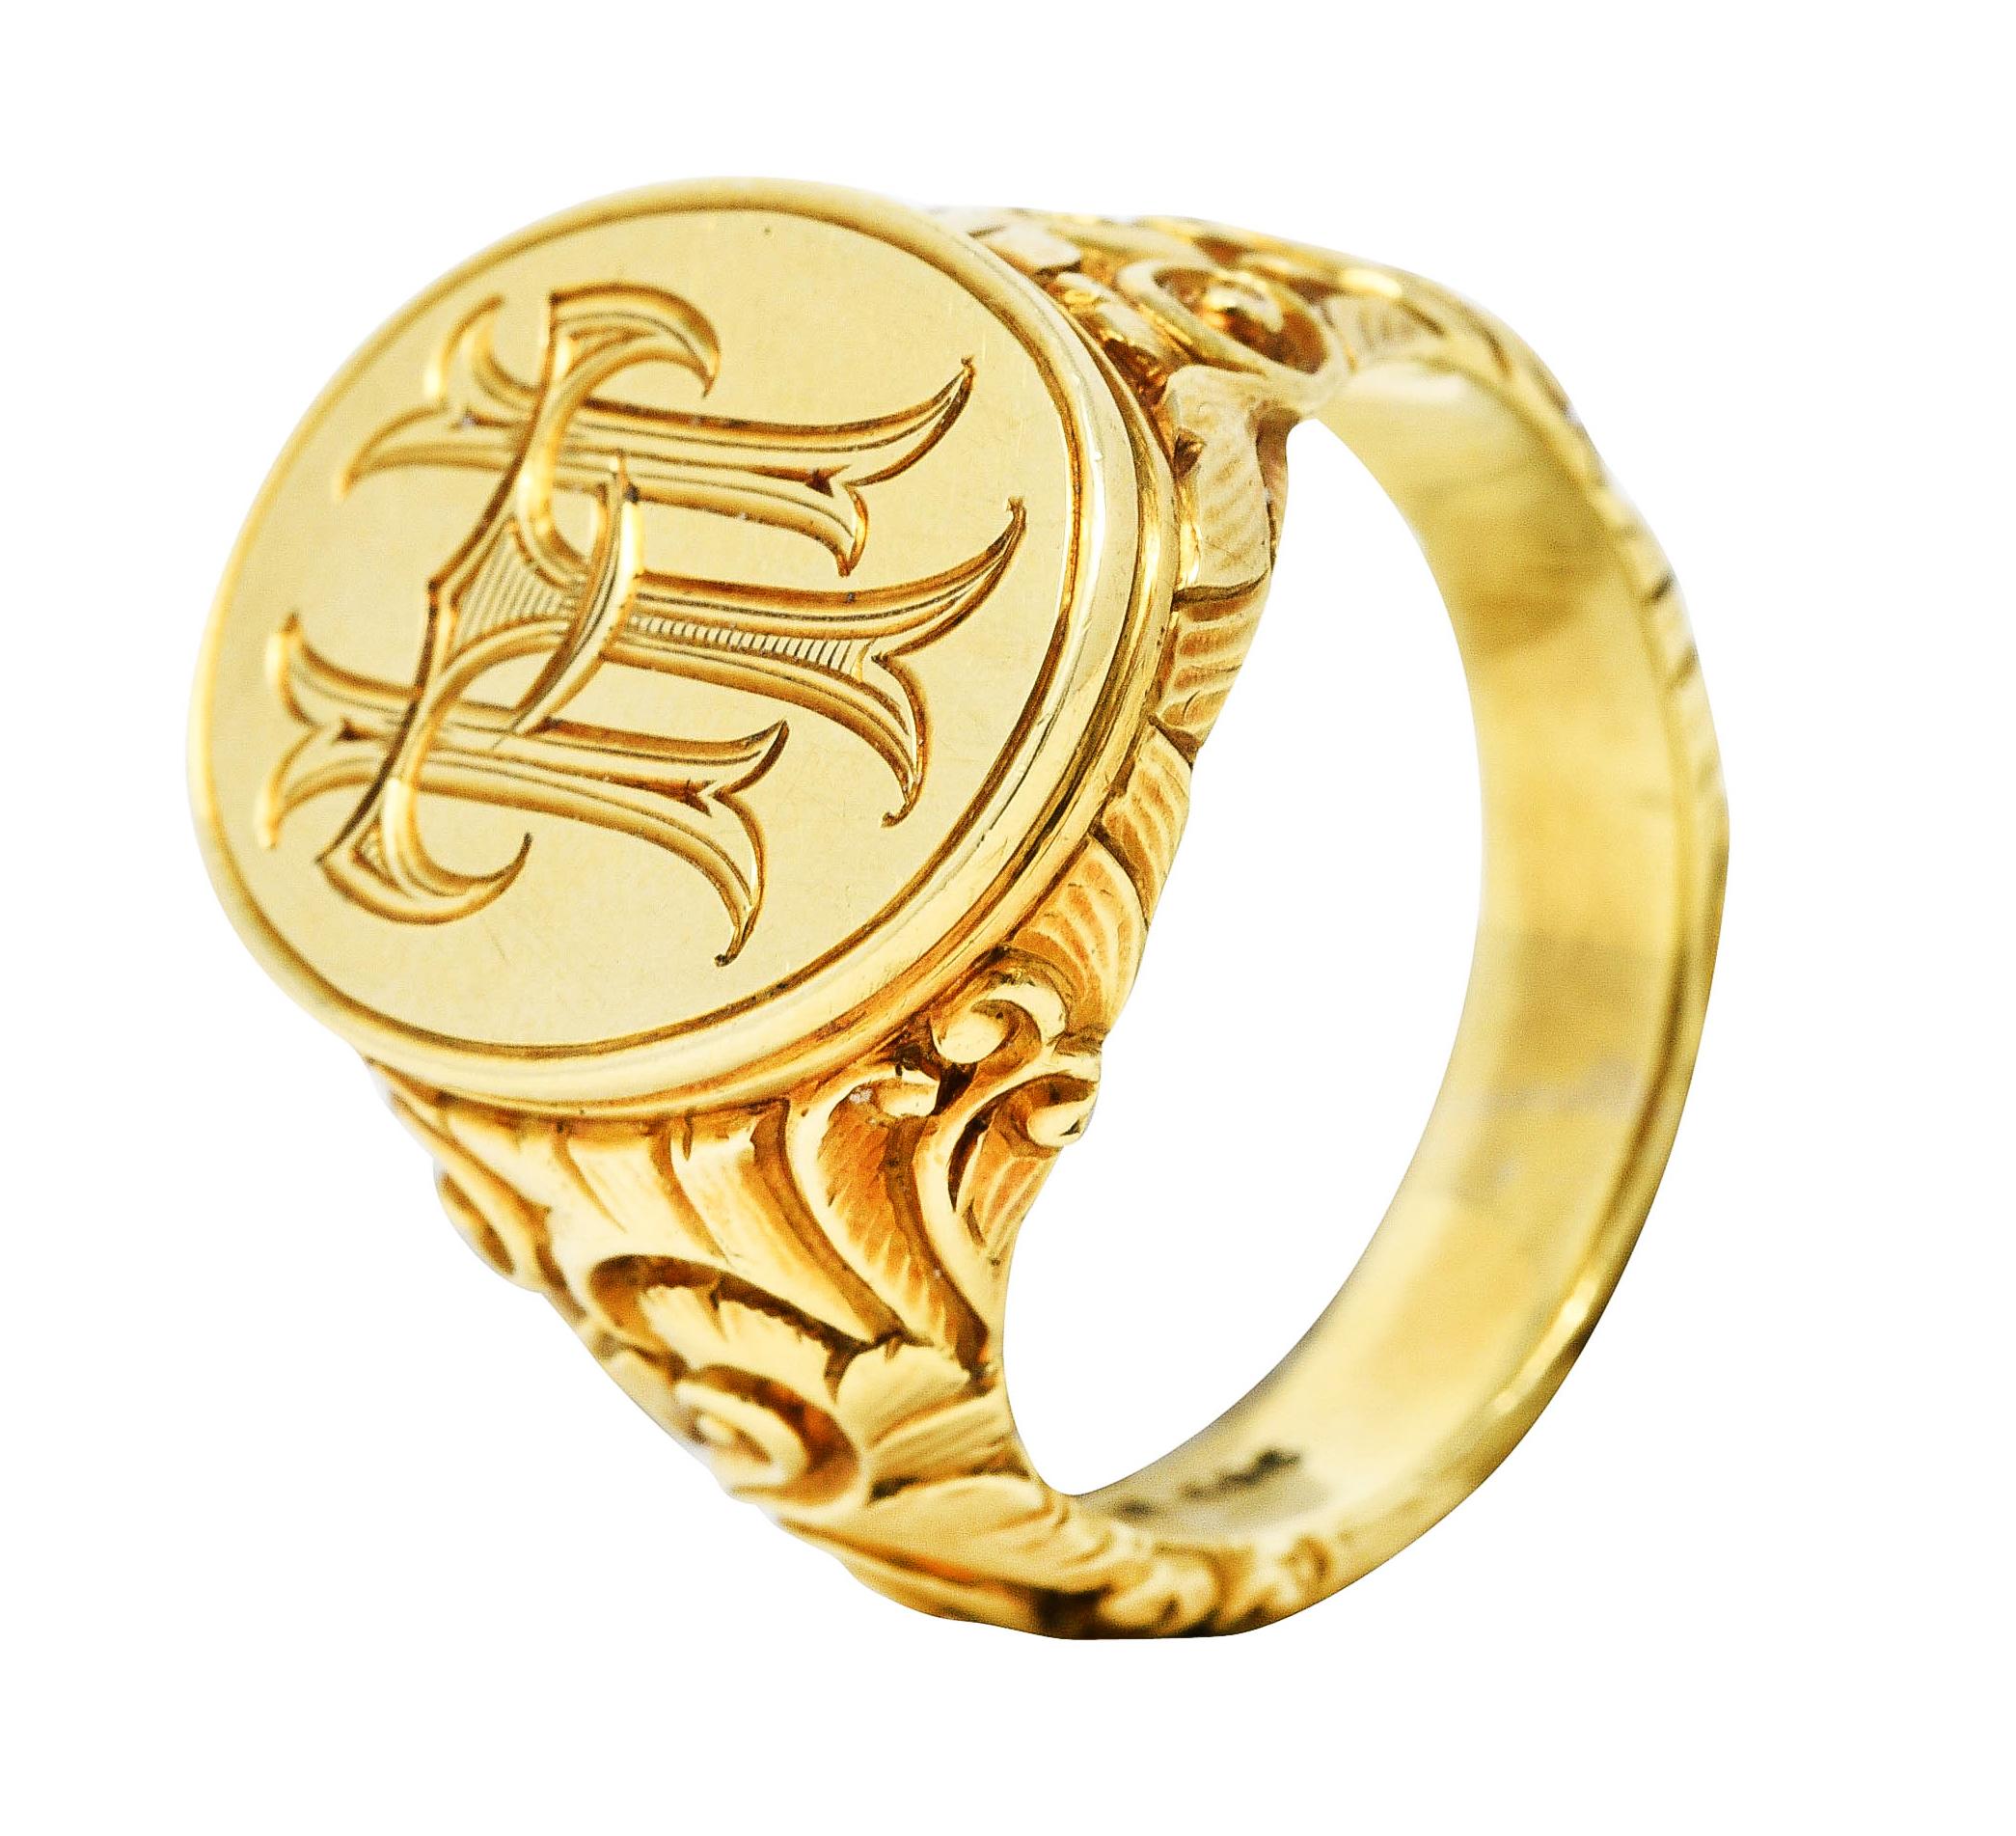 Scofield & Co. Art Nouveau 14 Karat Yellow Gold Scrolling Unisex Signet Ring 2